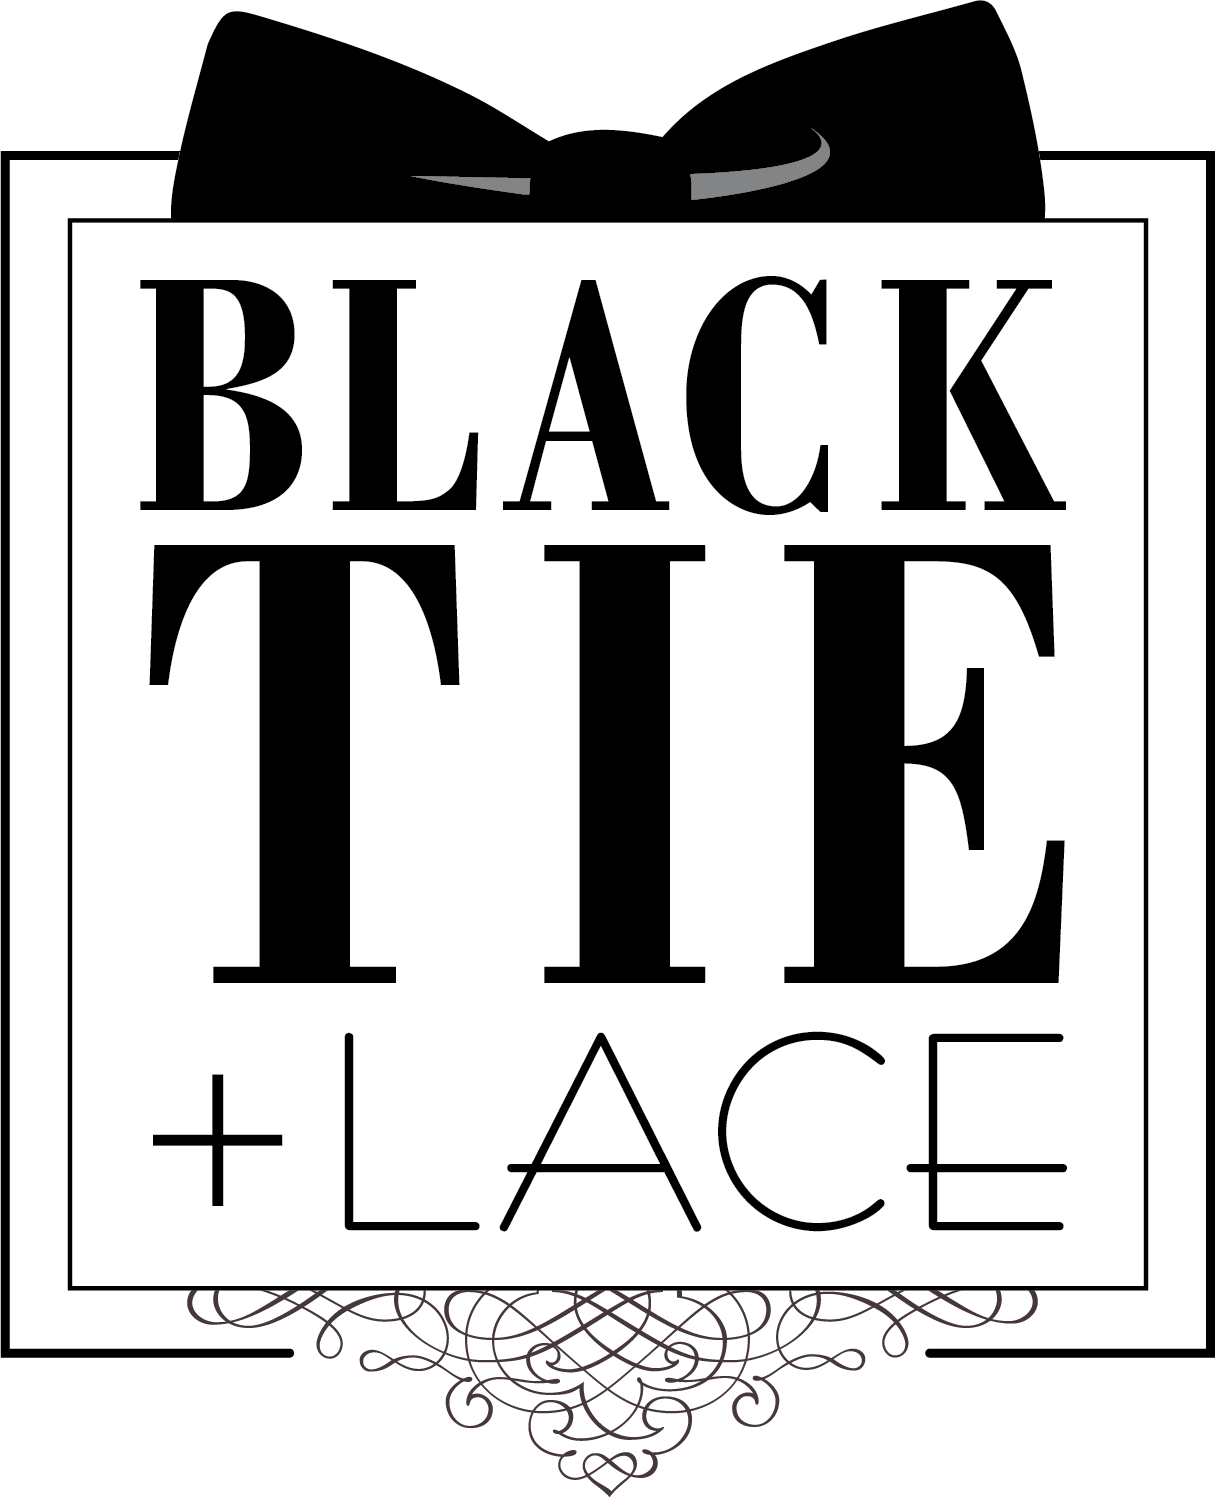 BlackTie+Lace